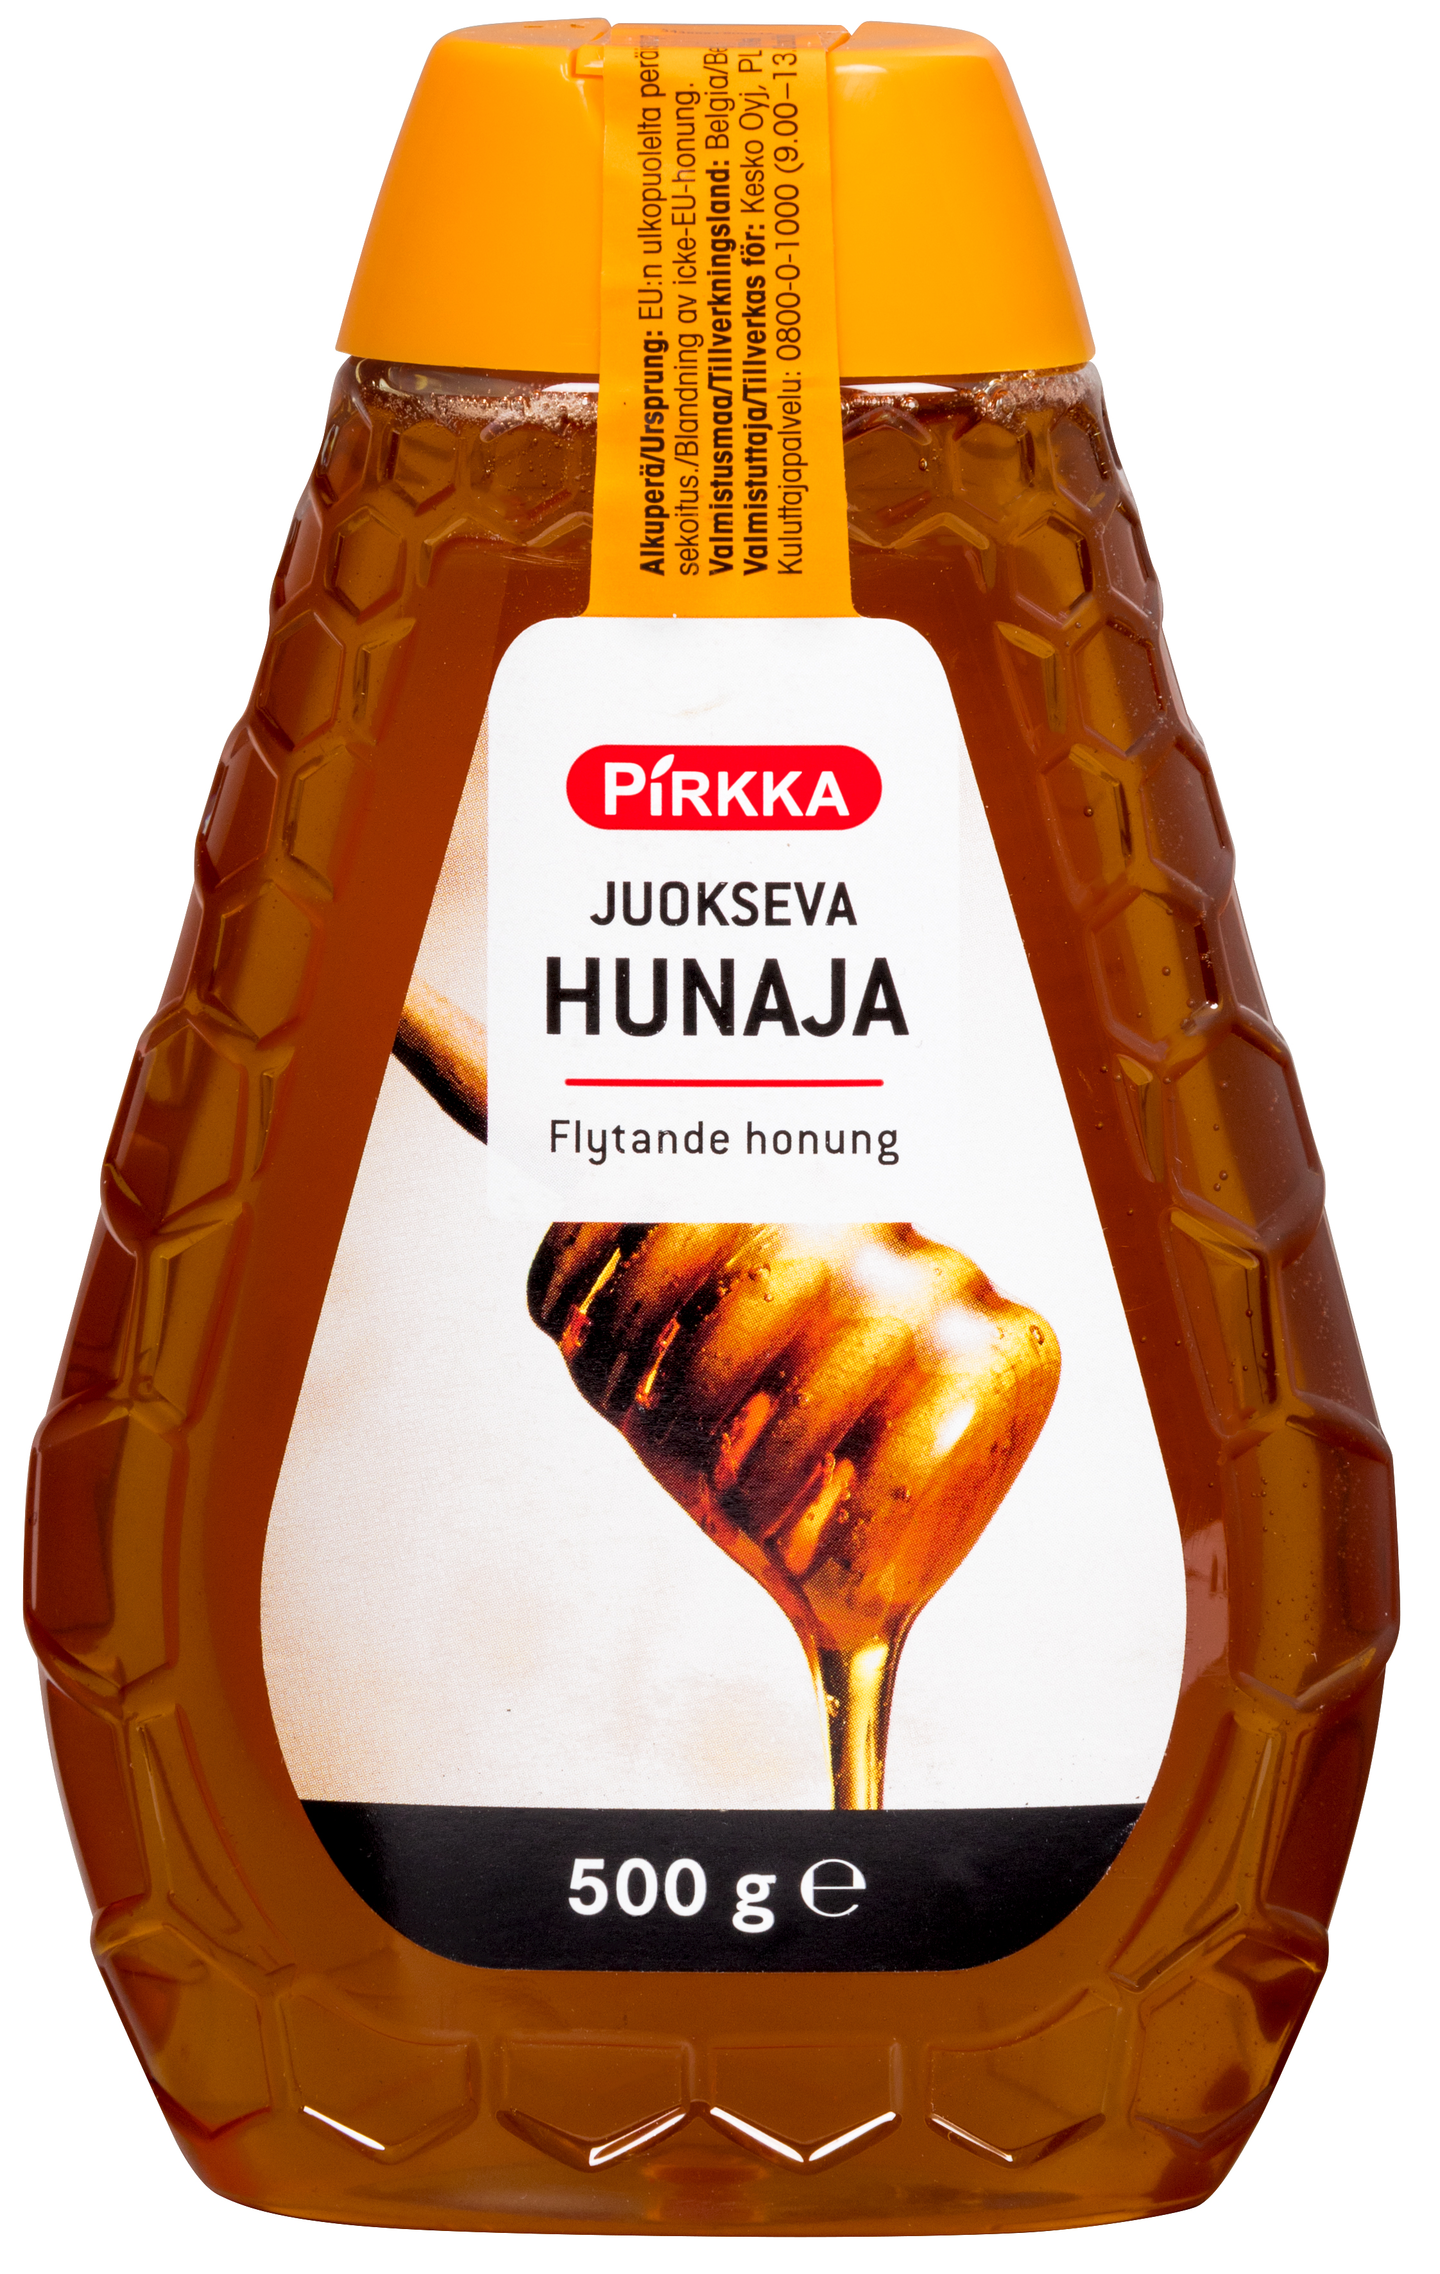 Pirkka juokseva hunaja 500g | K-Ruoka Verkkokauppa